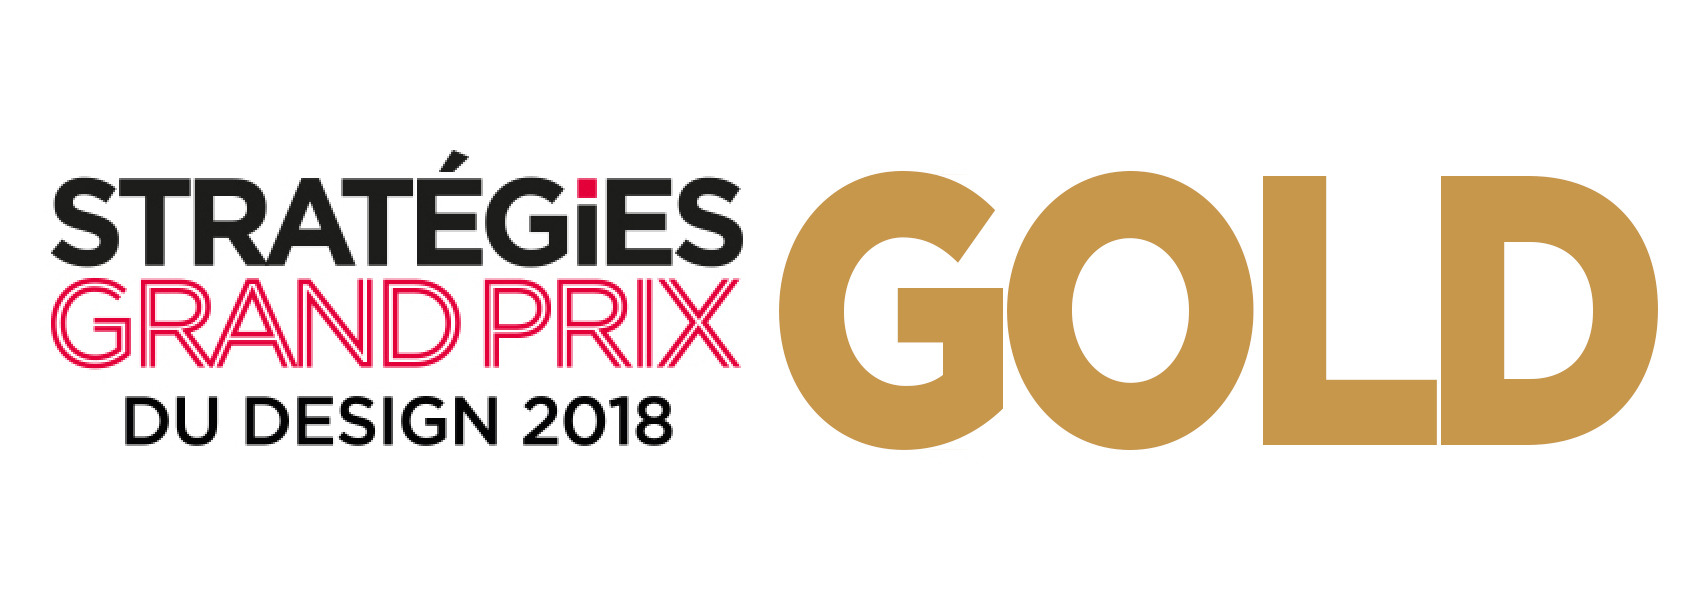 GOLD - GRAND PRIX STRATÉGIES DU DESIGN 2018